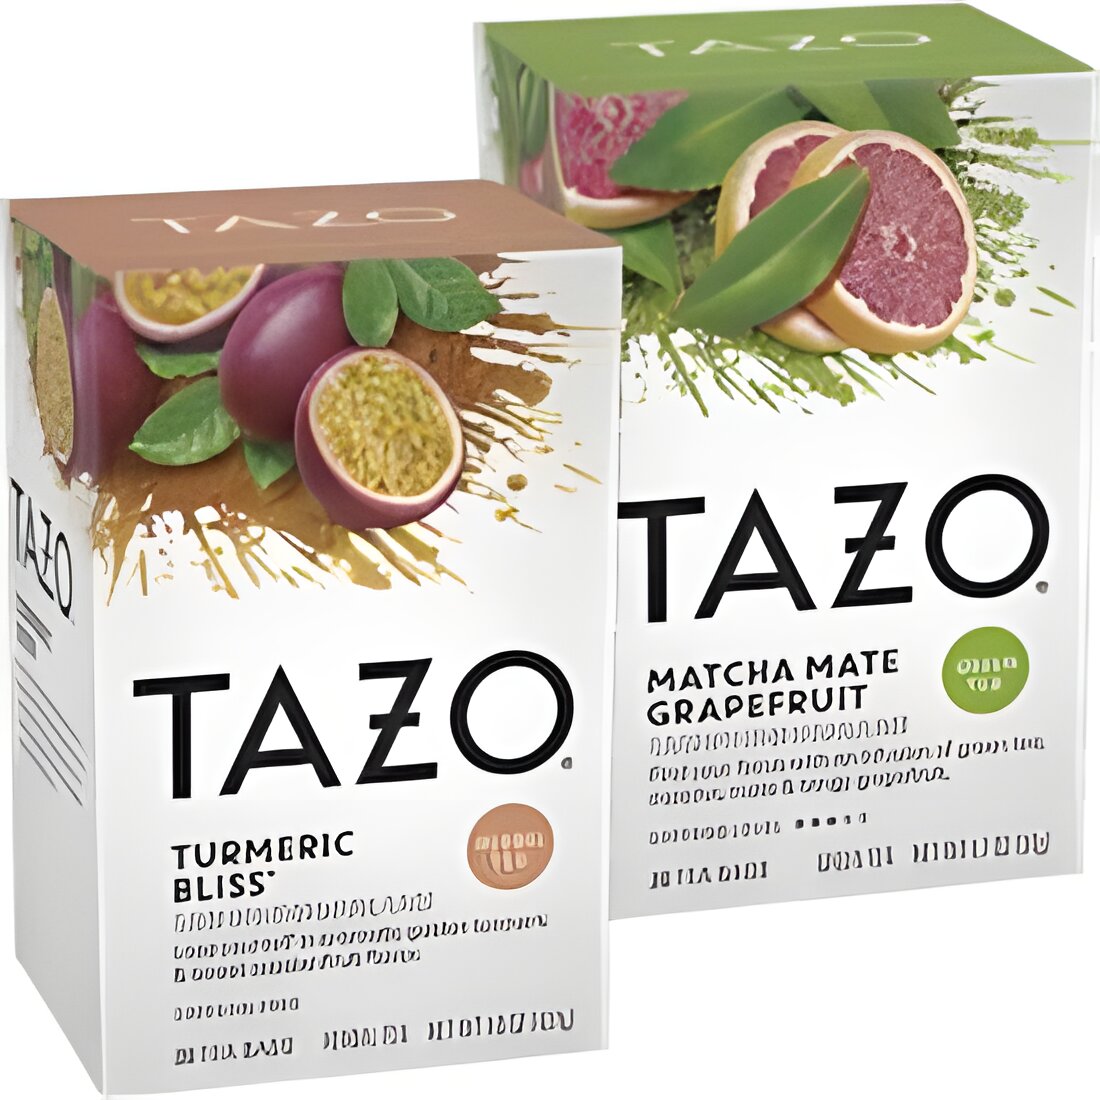 Free TAZO Turmeric Bliss and Matcha Mate Grapefruit Tea